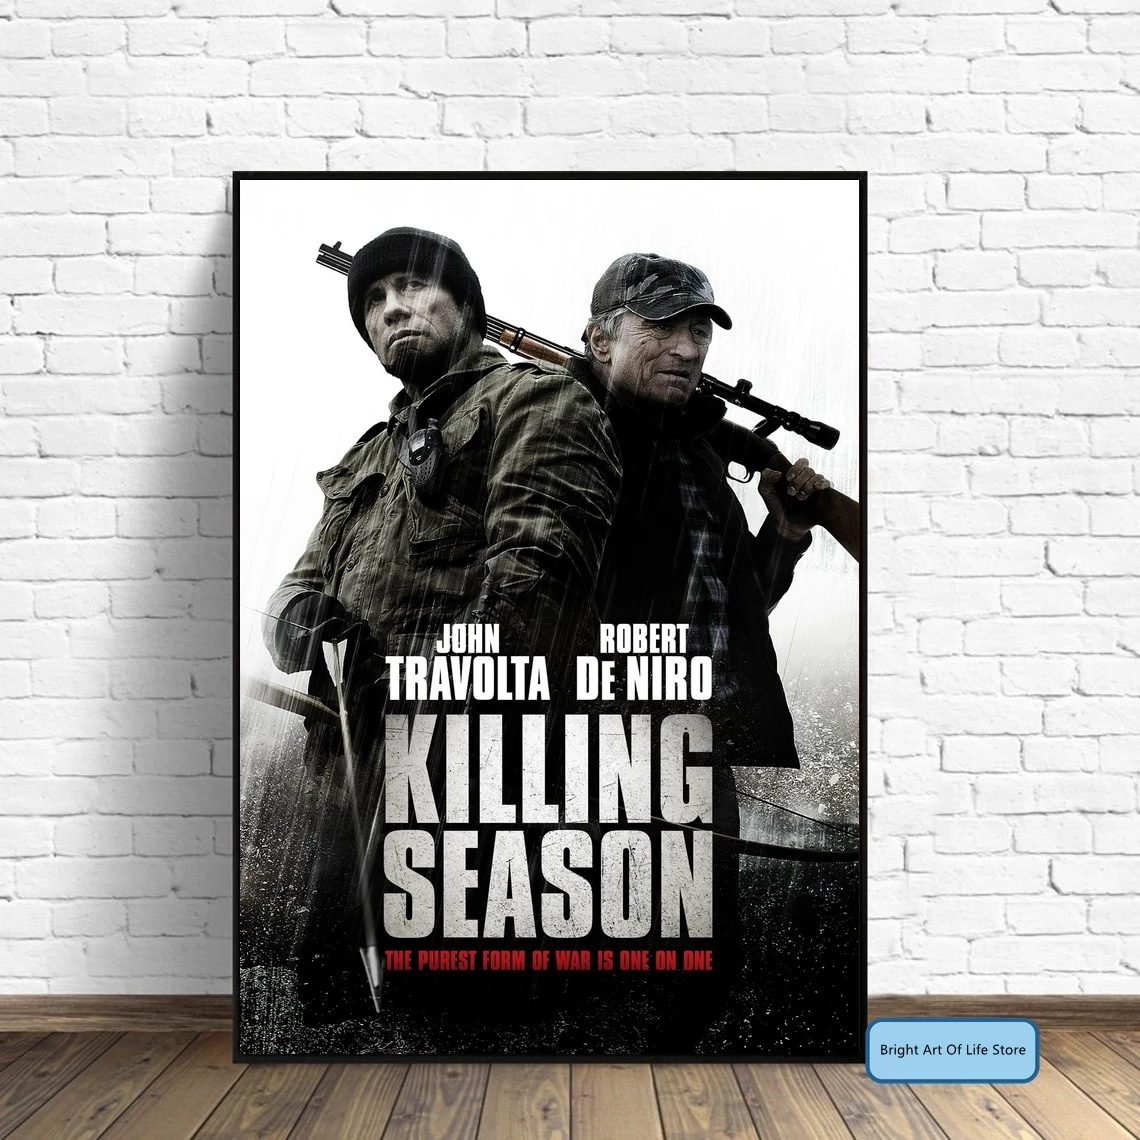 

Killing Season (2013) Movie Poster Cover Photo Print Canvas Wall Art Home Decor (Unframed)